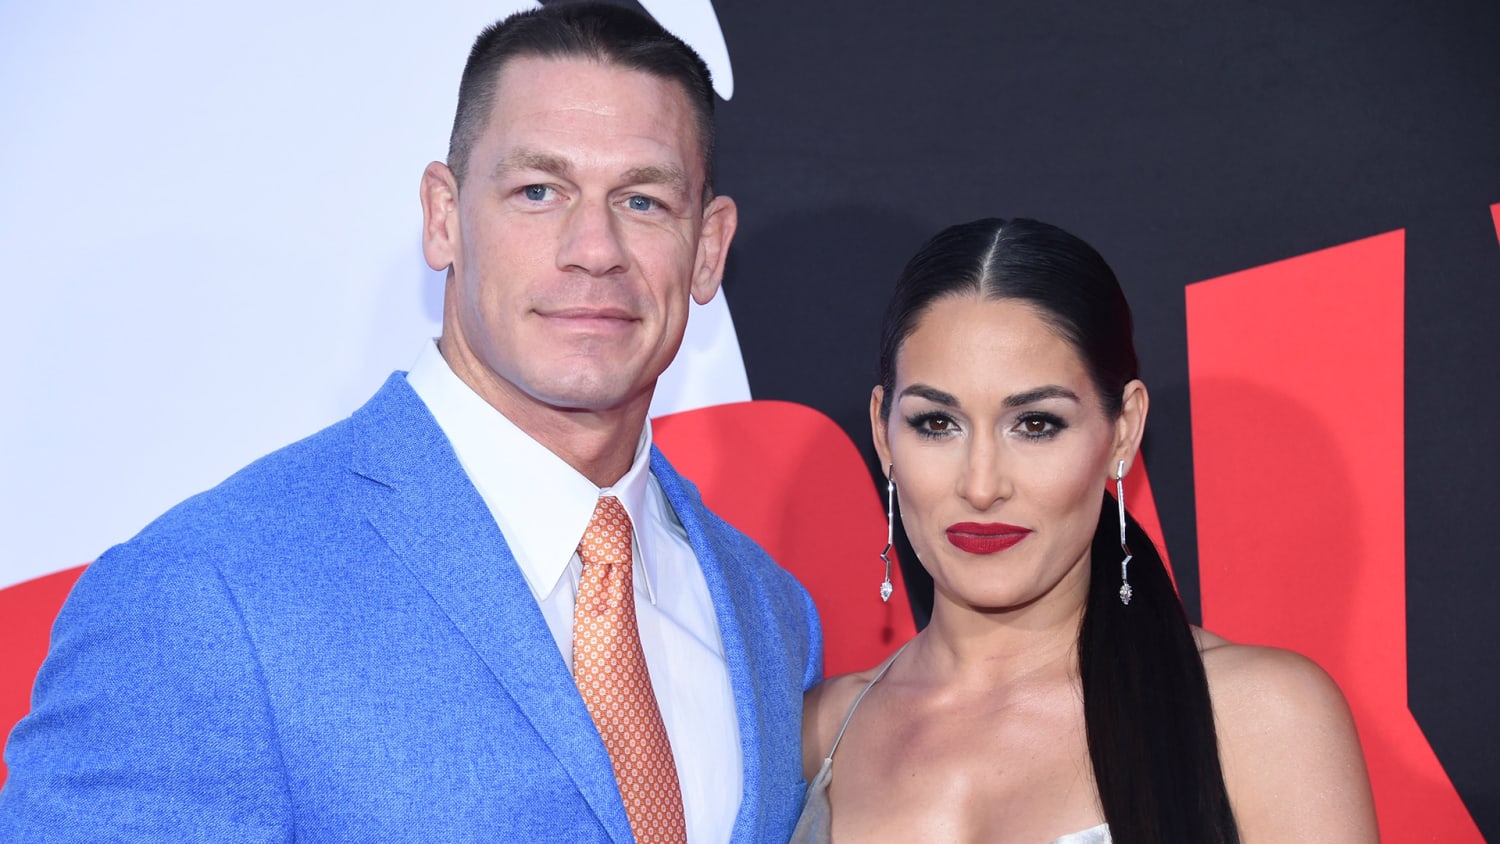 WWE stars John Cena and Nikki Bella split after 6 years together